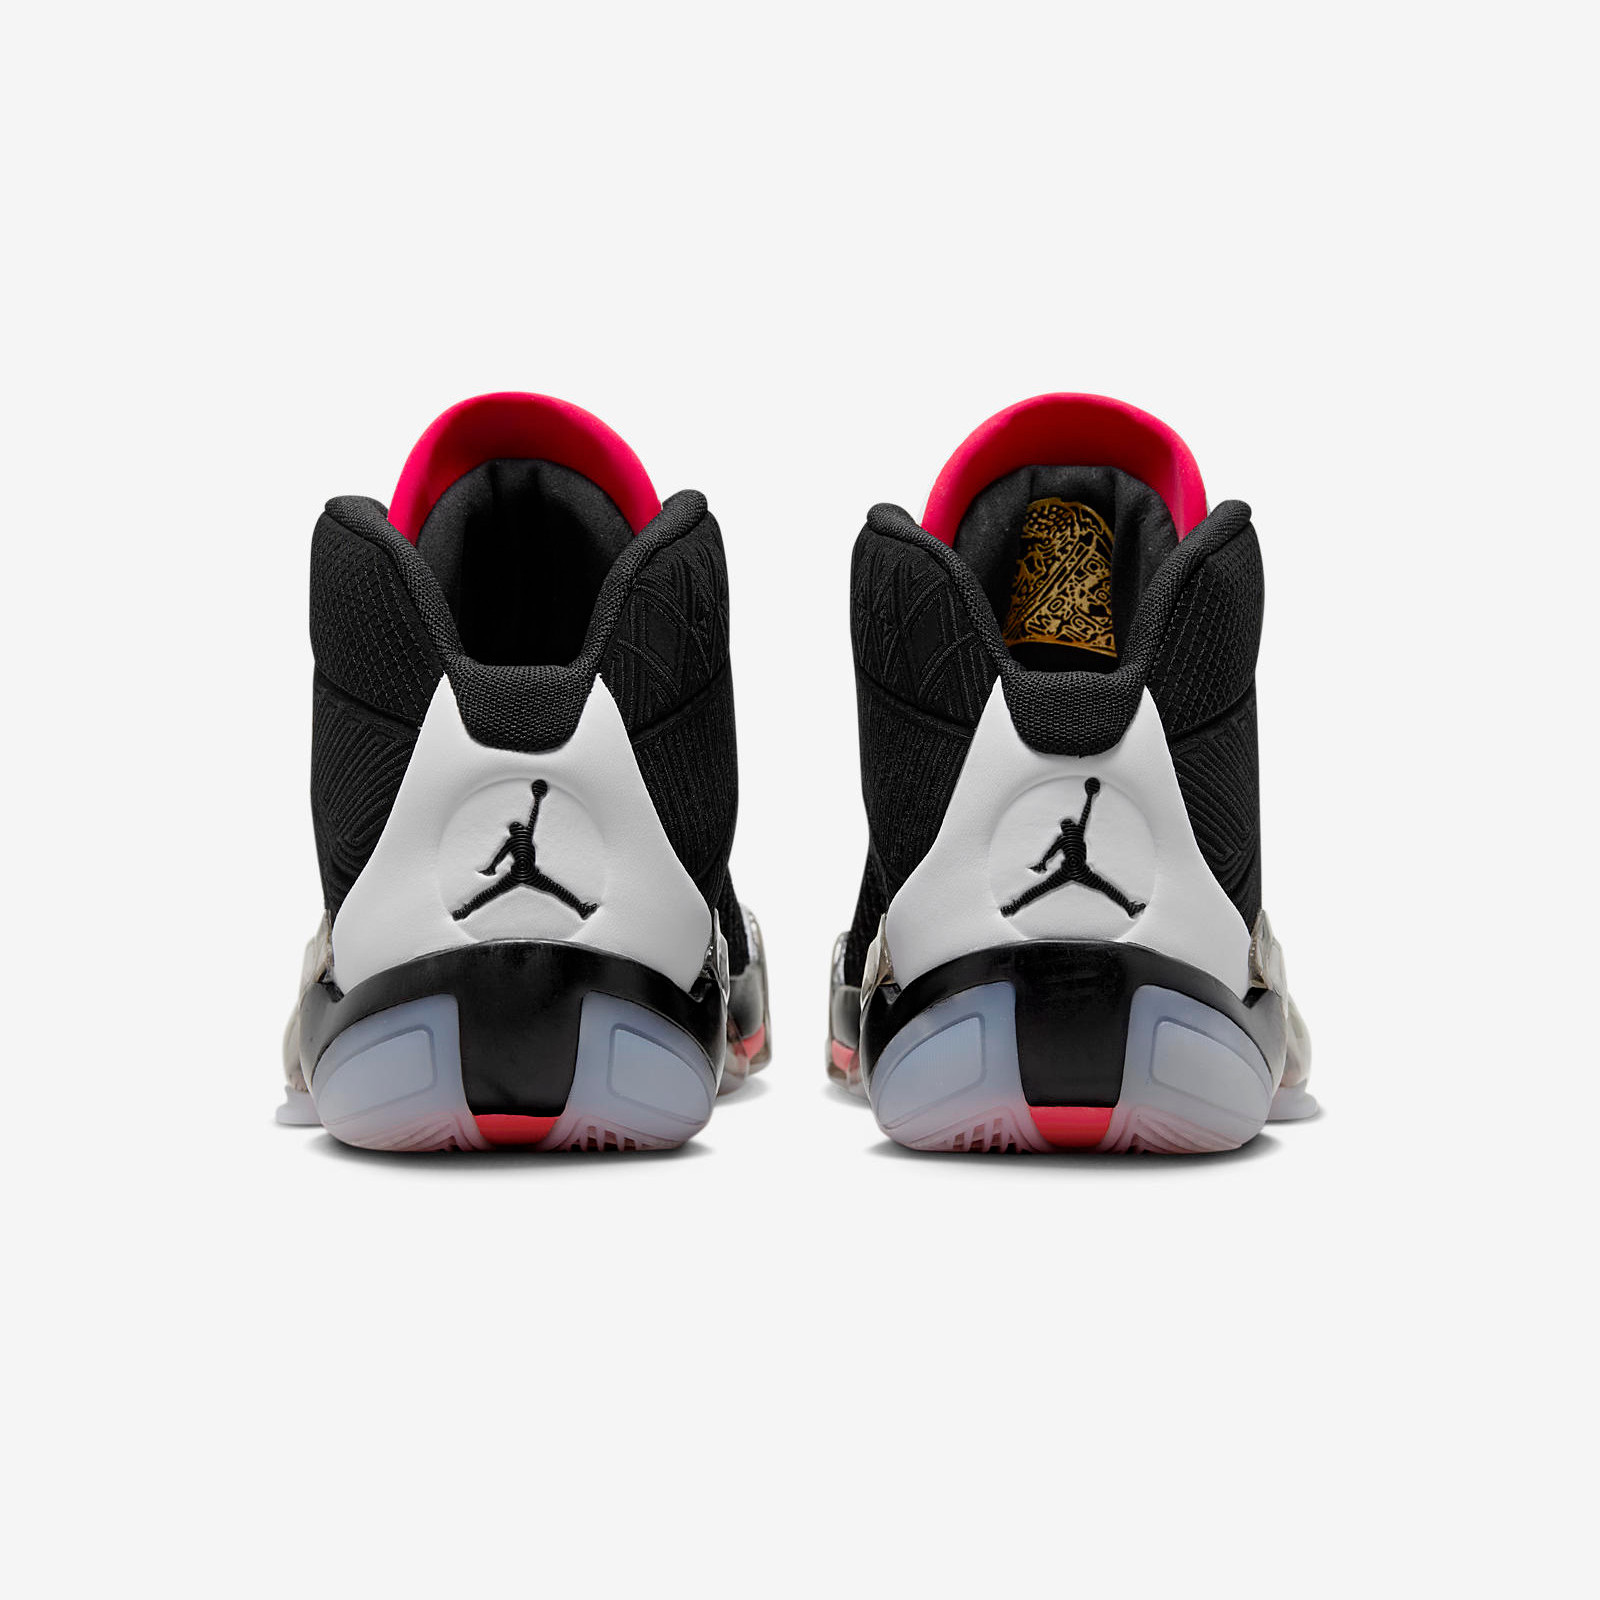 Air Jordan XXXVIII
« Fundamental »